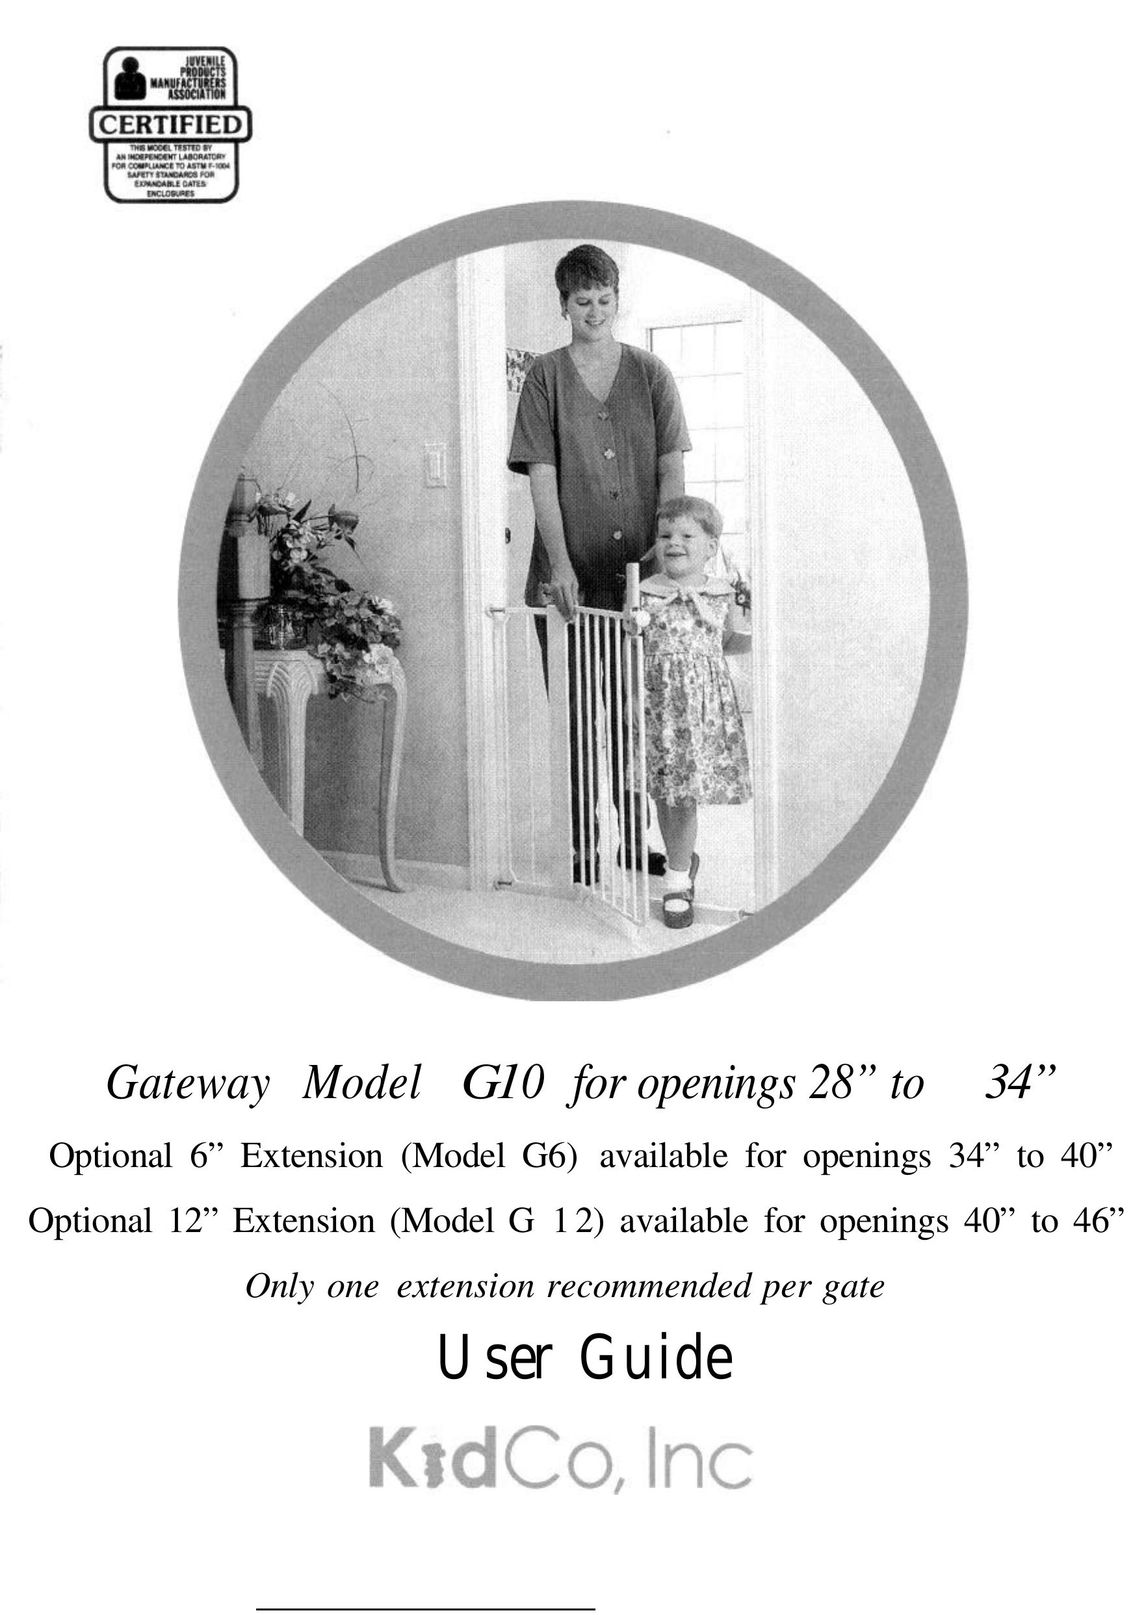 Kidco G10 Safety Gate User Manual